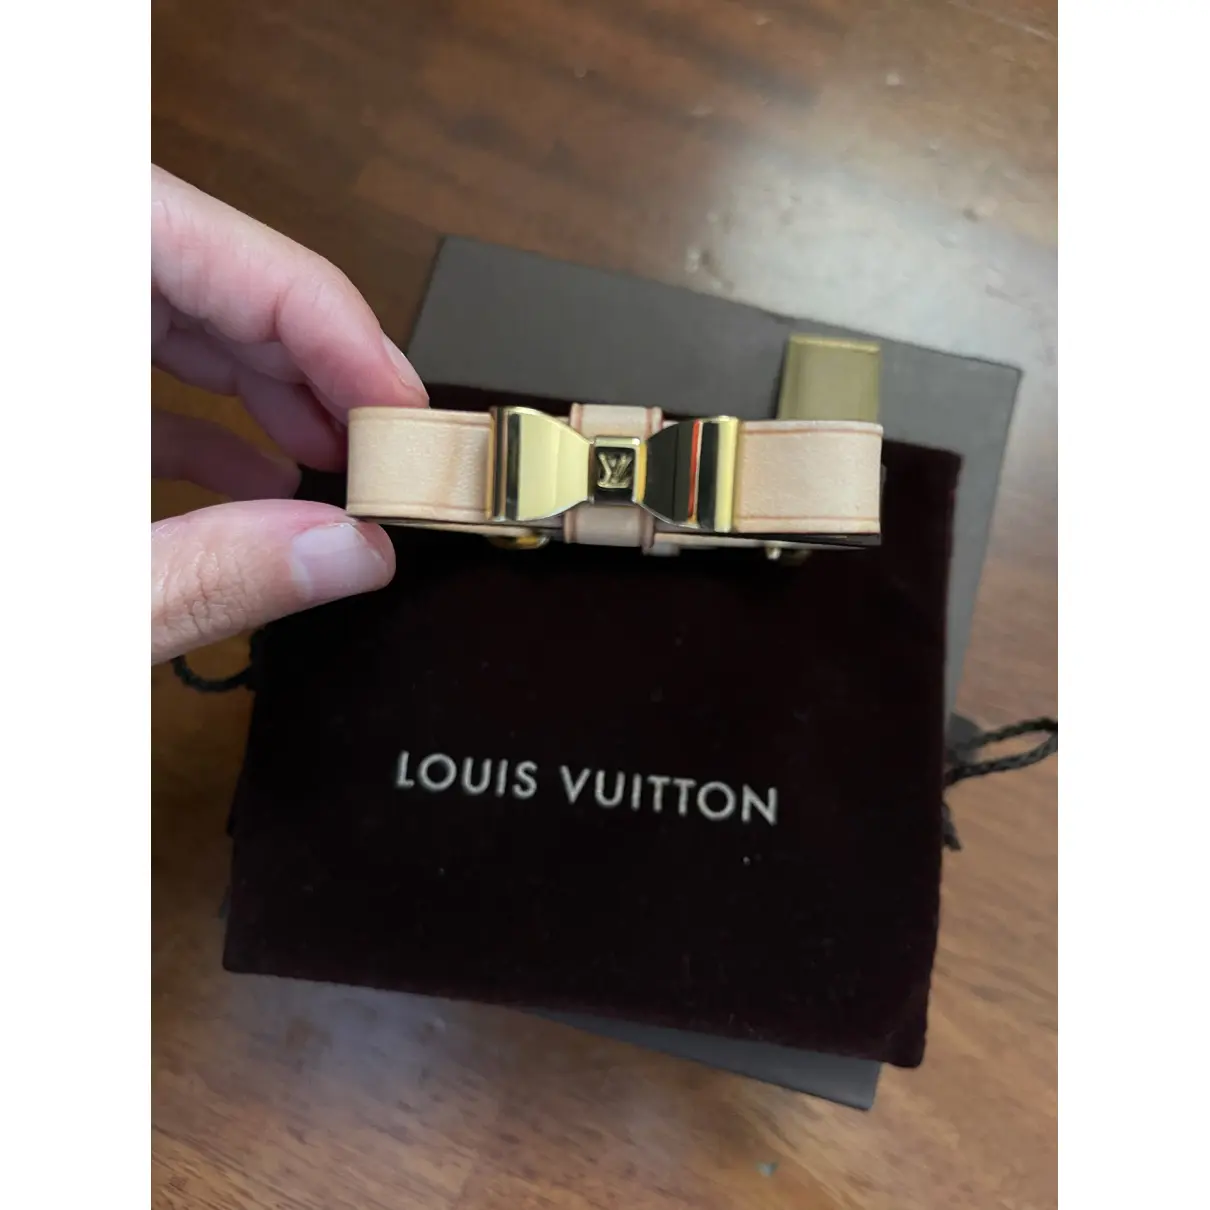 Buy Louis Vuitton Collar online